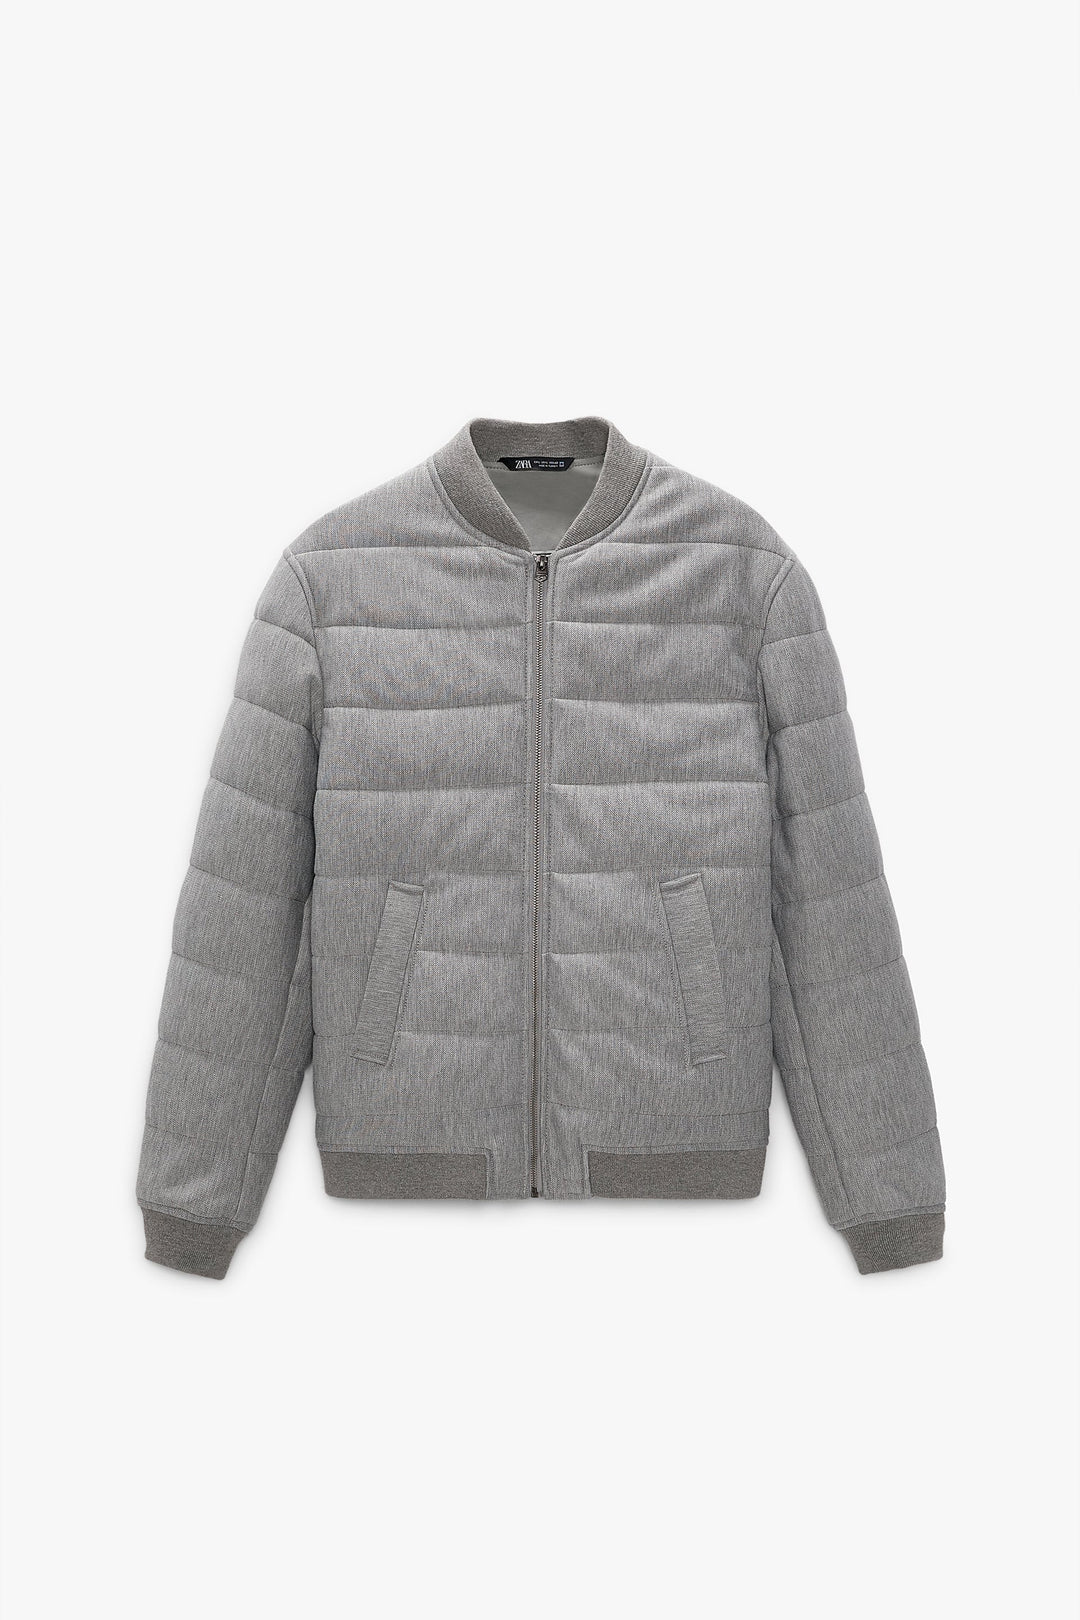 Zara Man F/S Knitted Jacket 0706/320/802